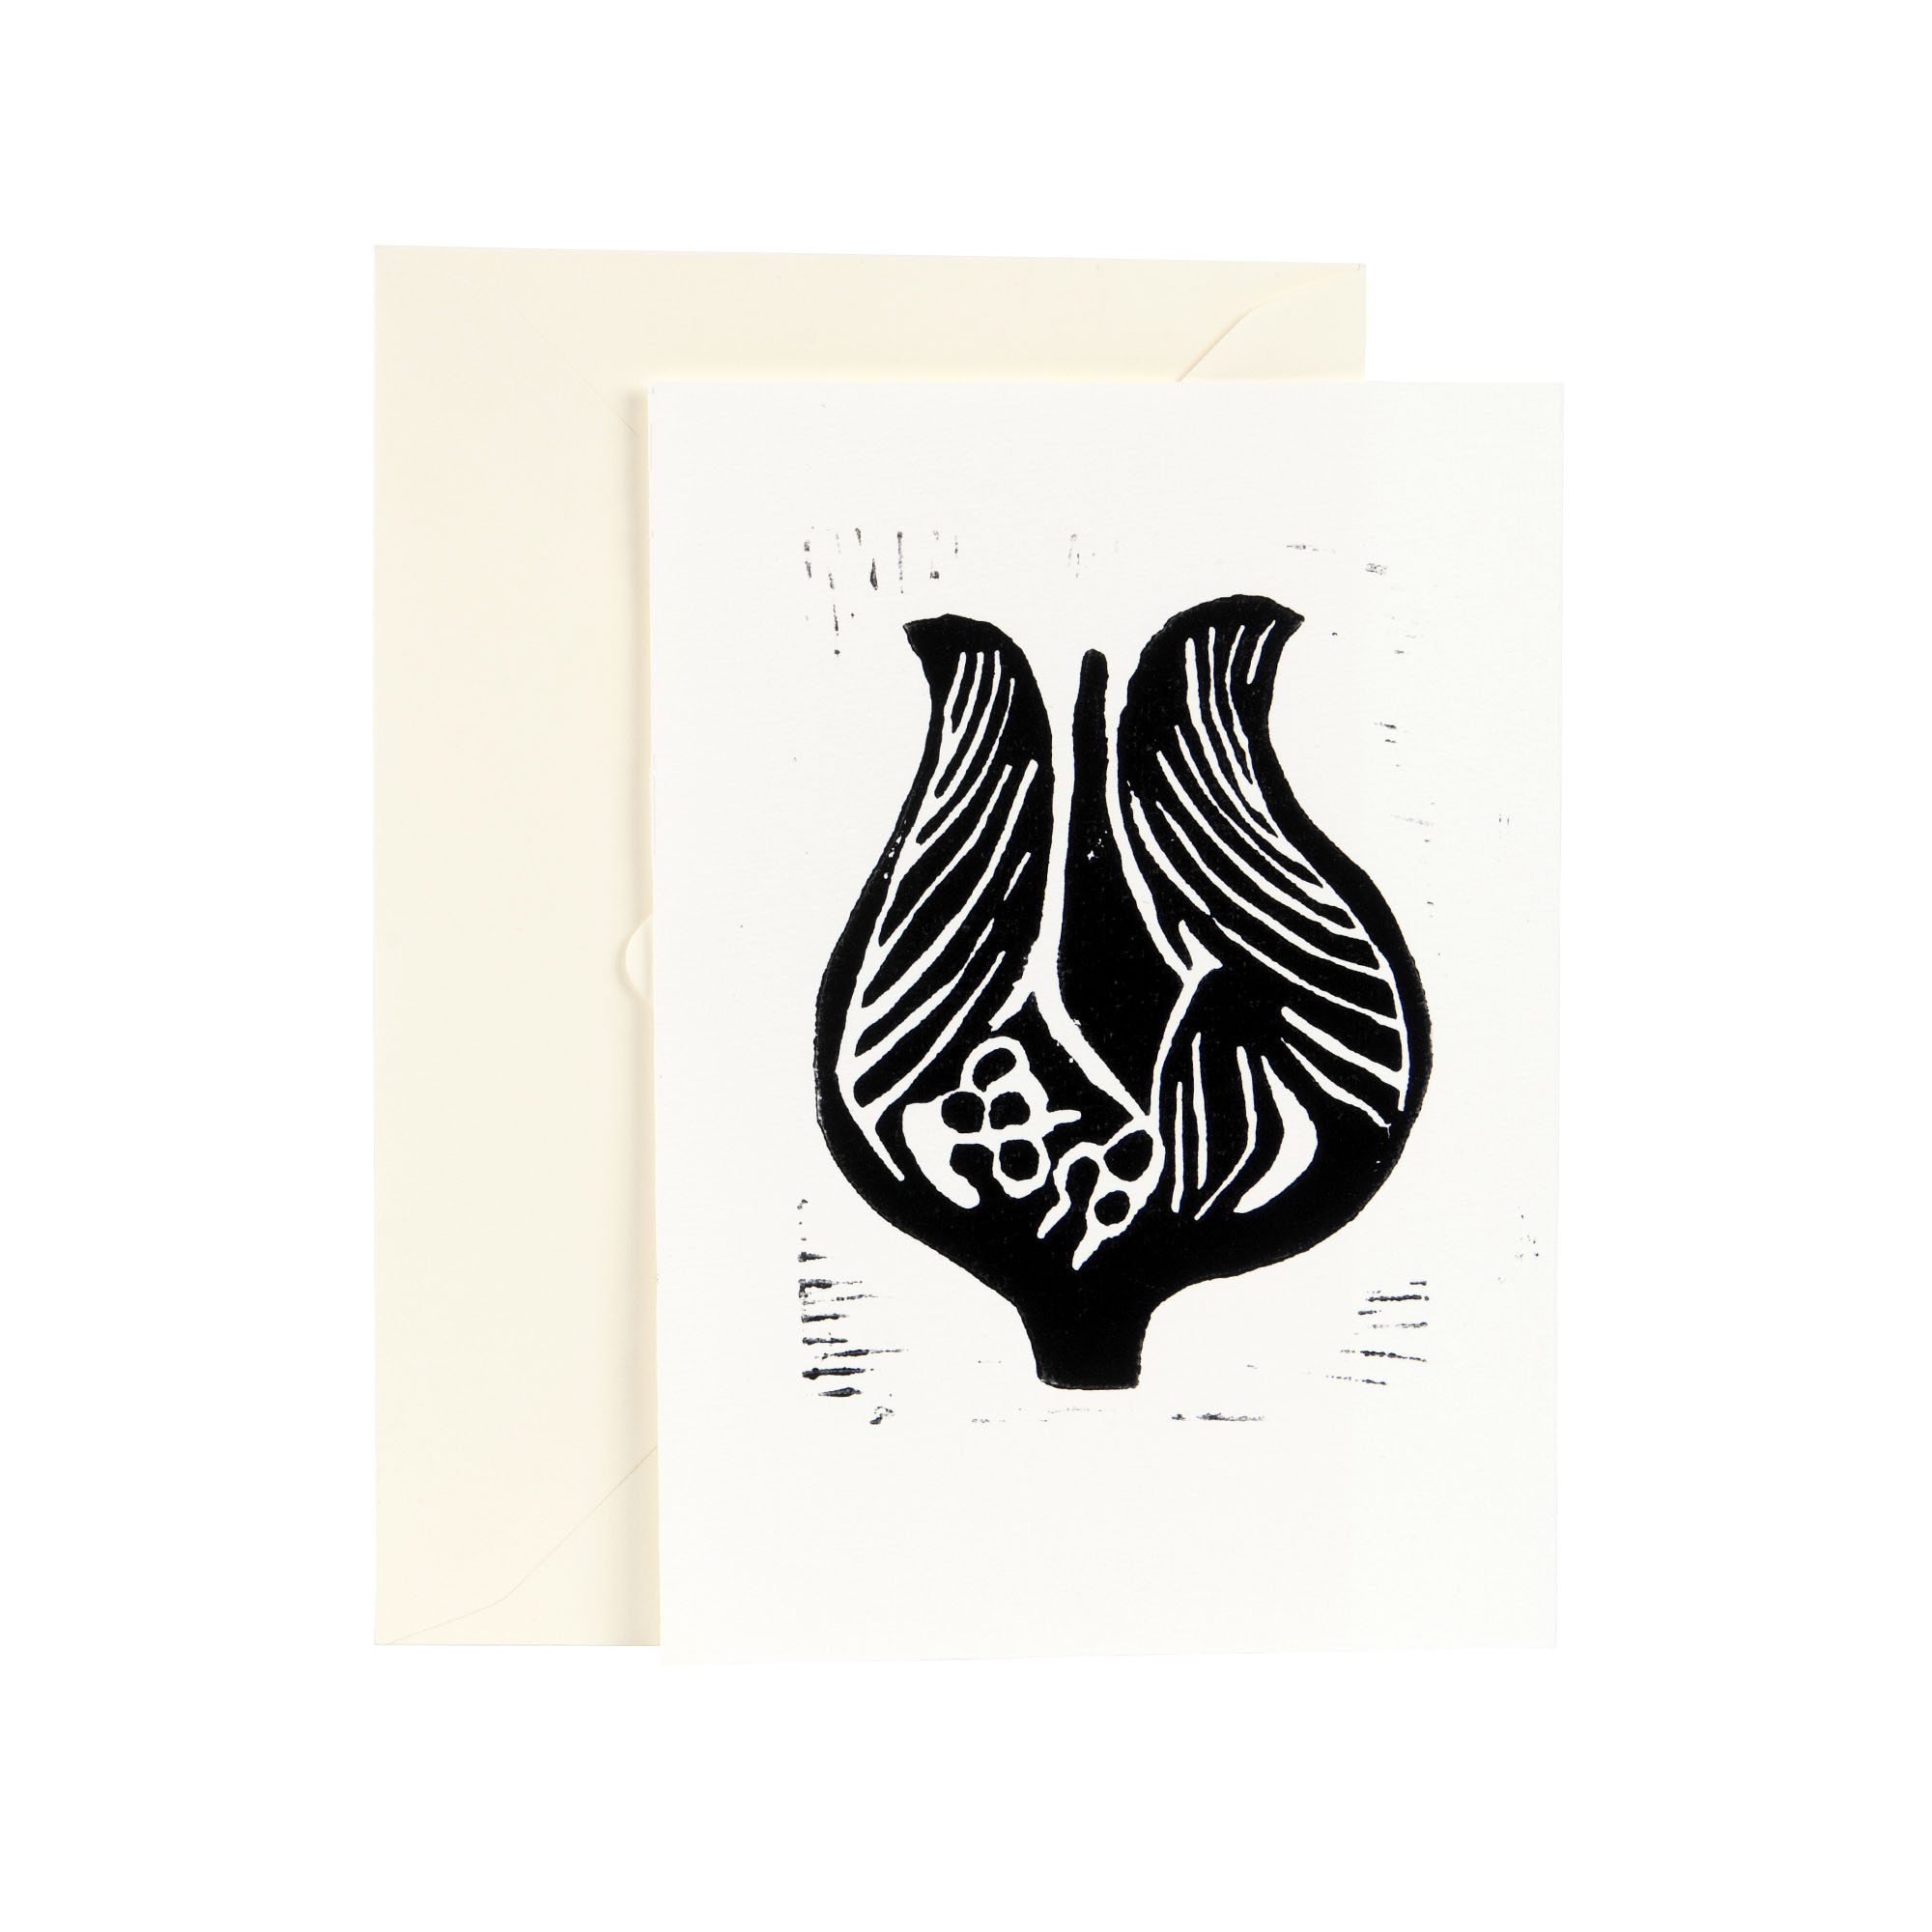 Greeting card, Cutting, Linocut by Anne Rosenberg, RosenbergCph